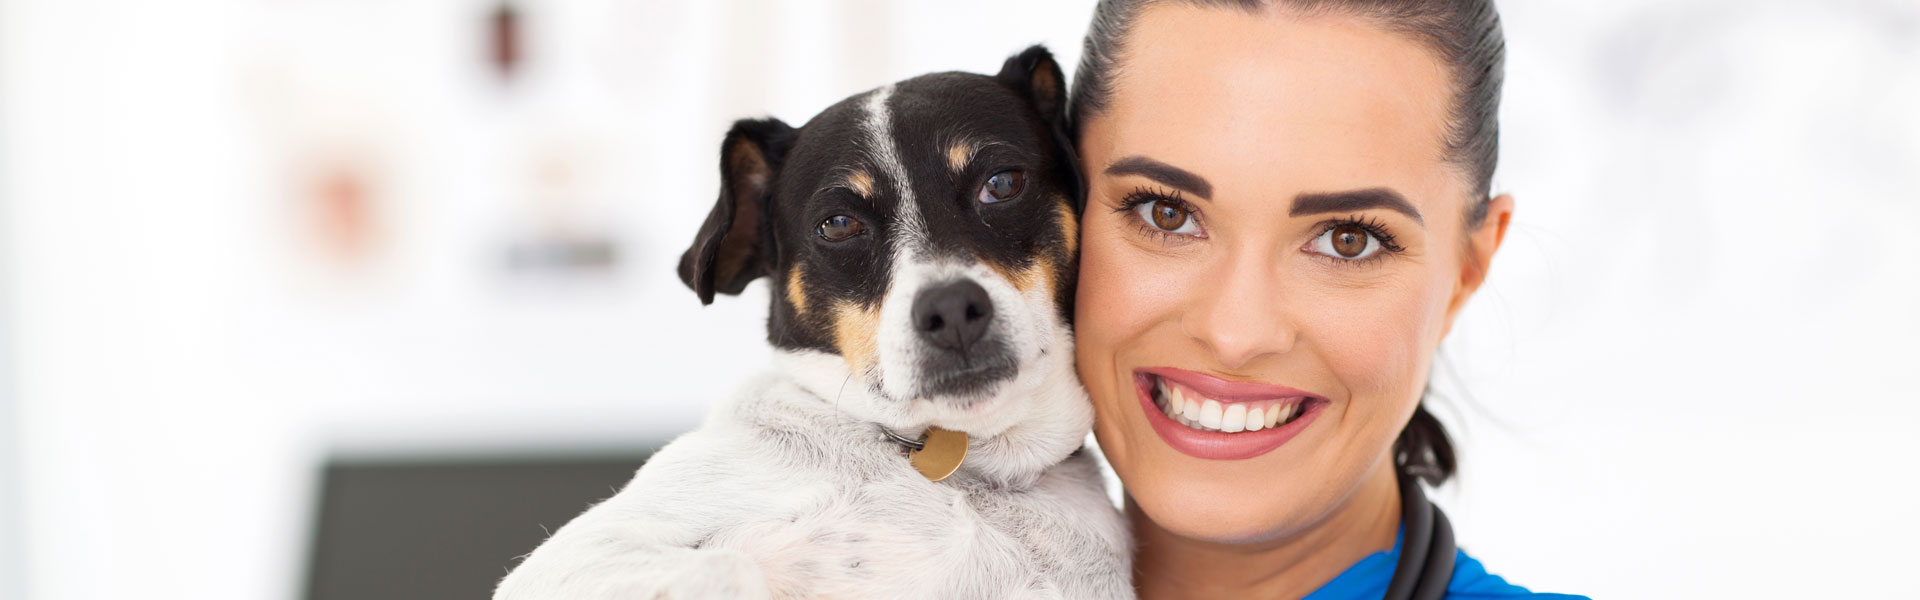 Veterinary nurse holding dog